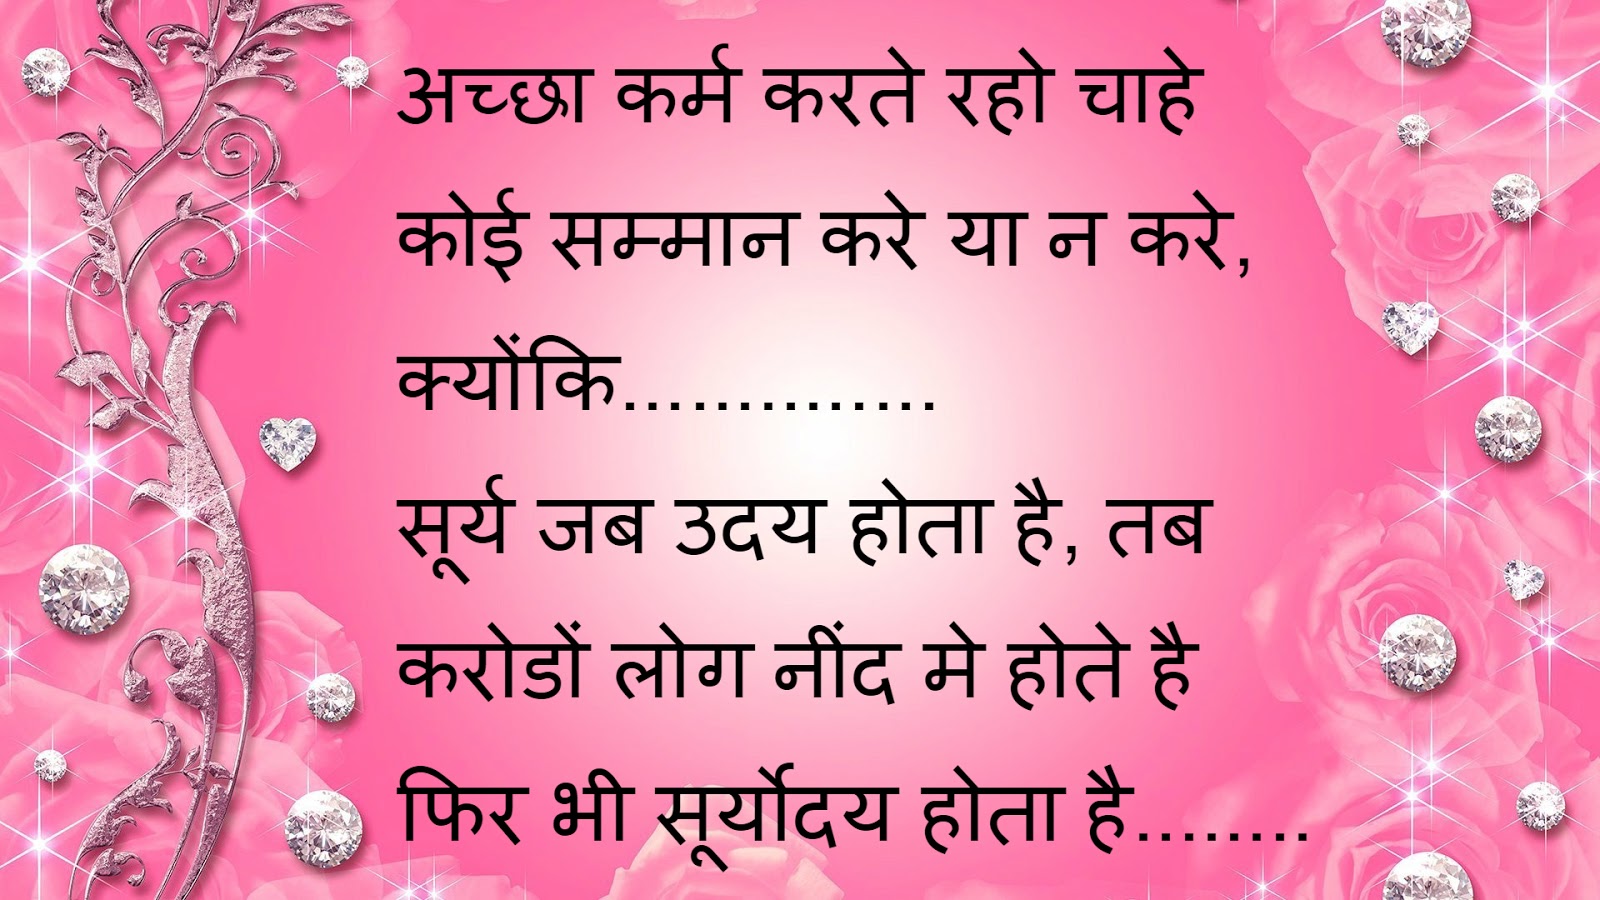 Hindi Shayari Image free whatsapp jokes images hindi love shayari messages Gujarati Romentic Shayari SMS New 2016 Shayari Love Wallpapers Here We